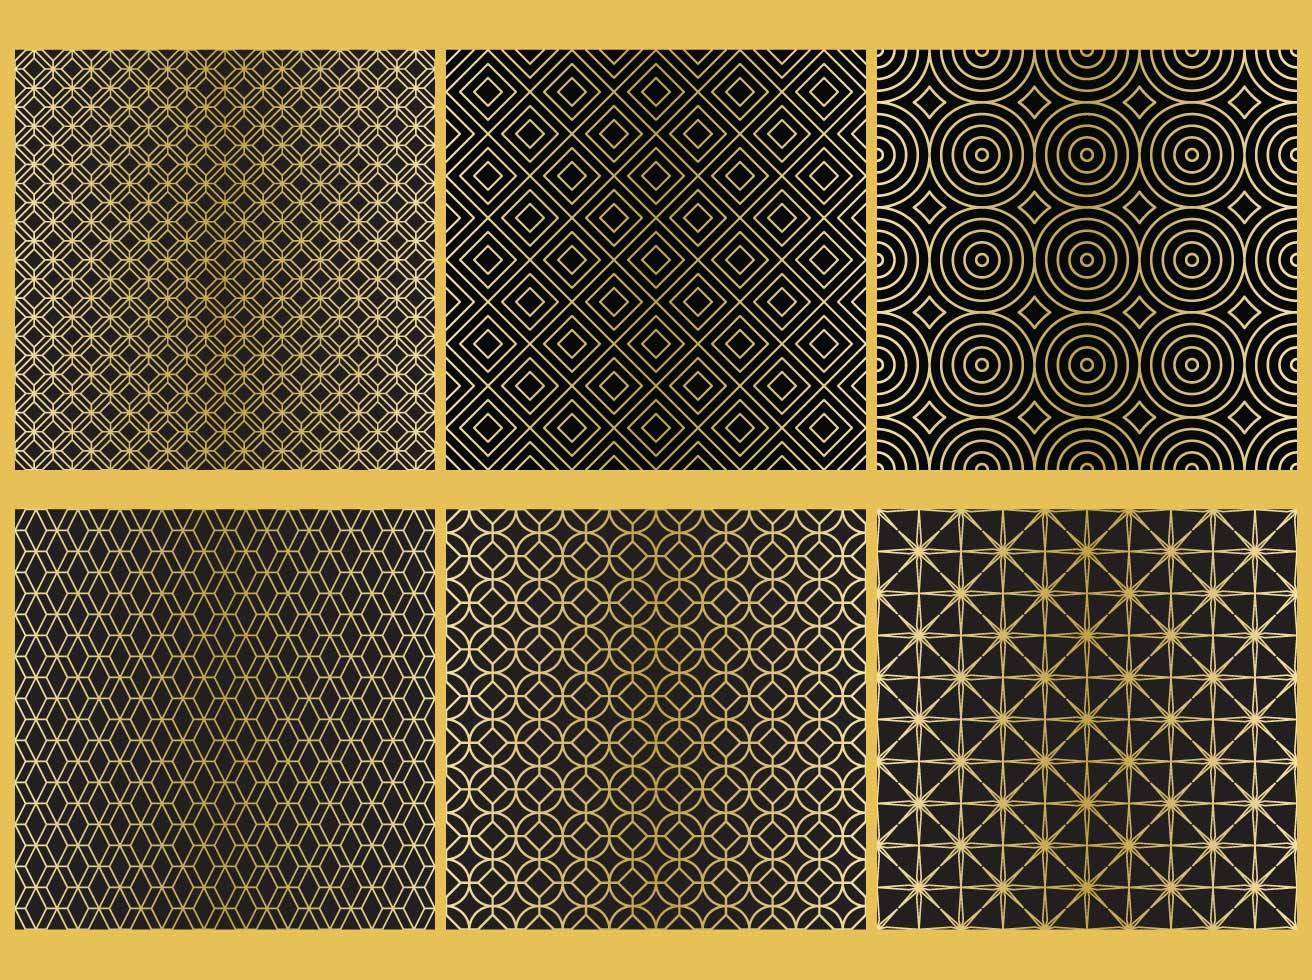 Golden Line Patterns Vector Art & Graphics | freevector.com